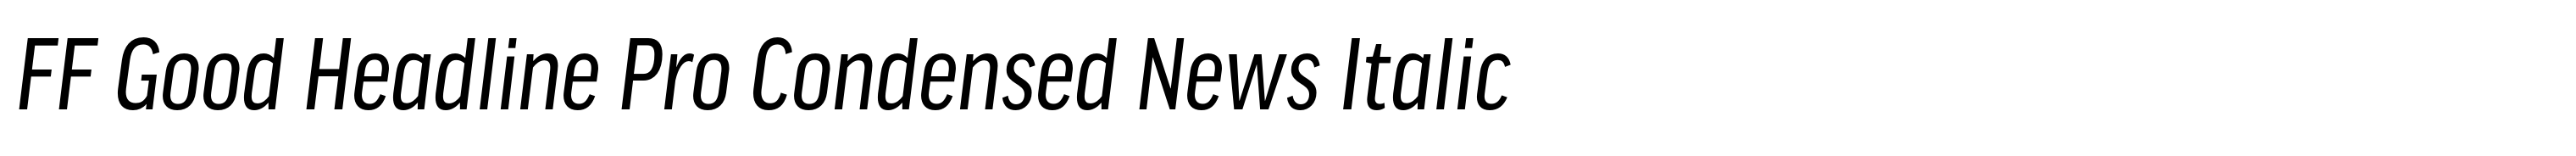 FF Good Headline Pro Condensed News Italic